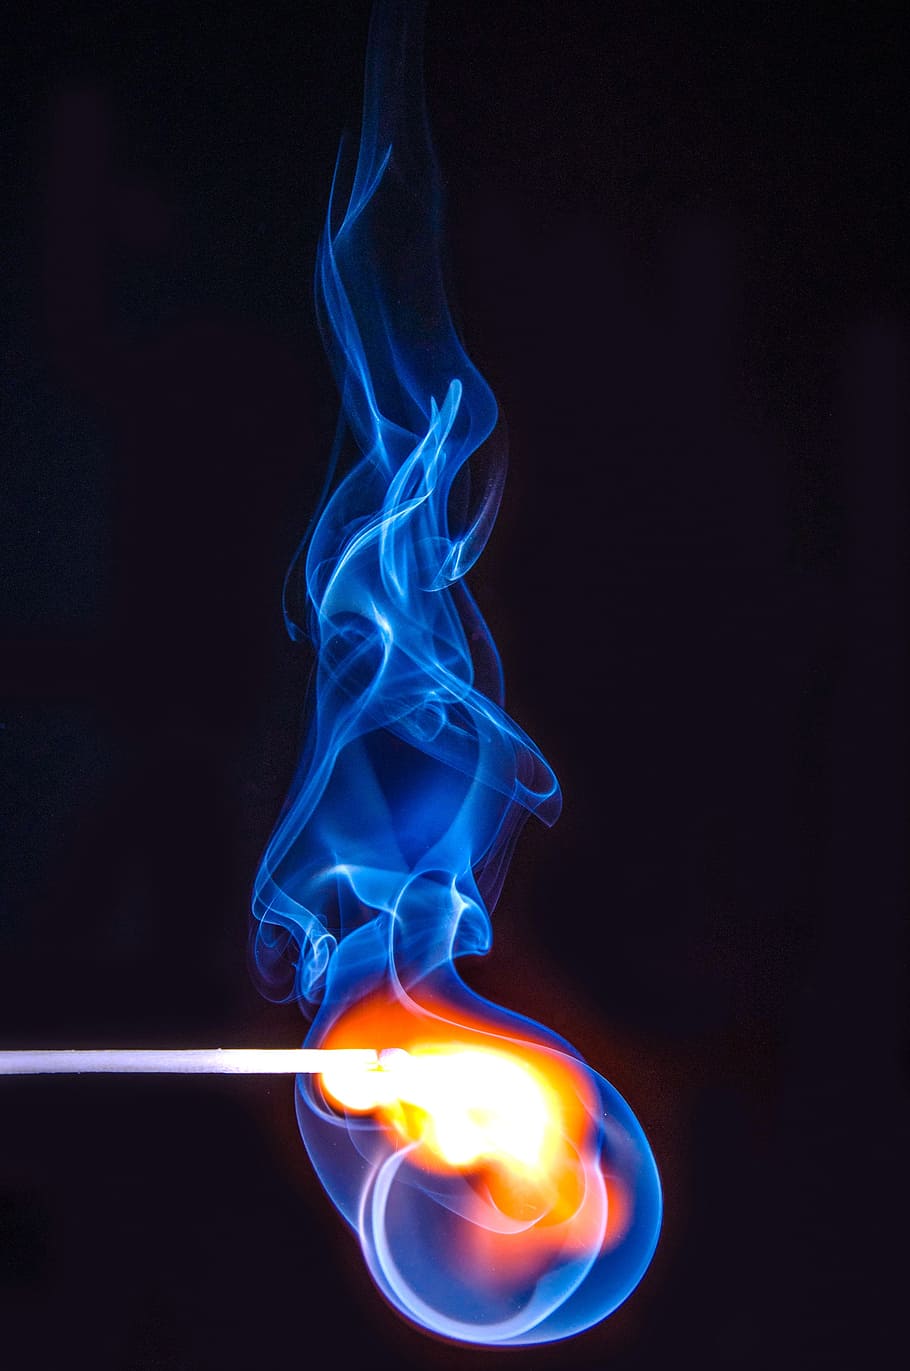 lighten stick match, burn, flame, hot, yellow, red, blue, smoke